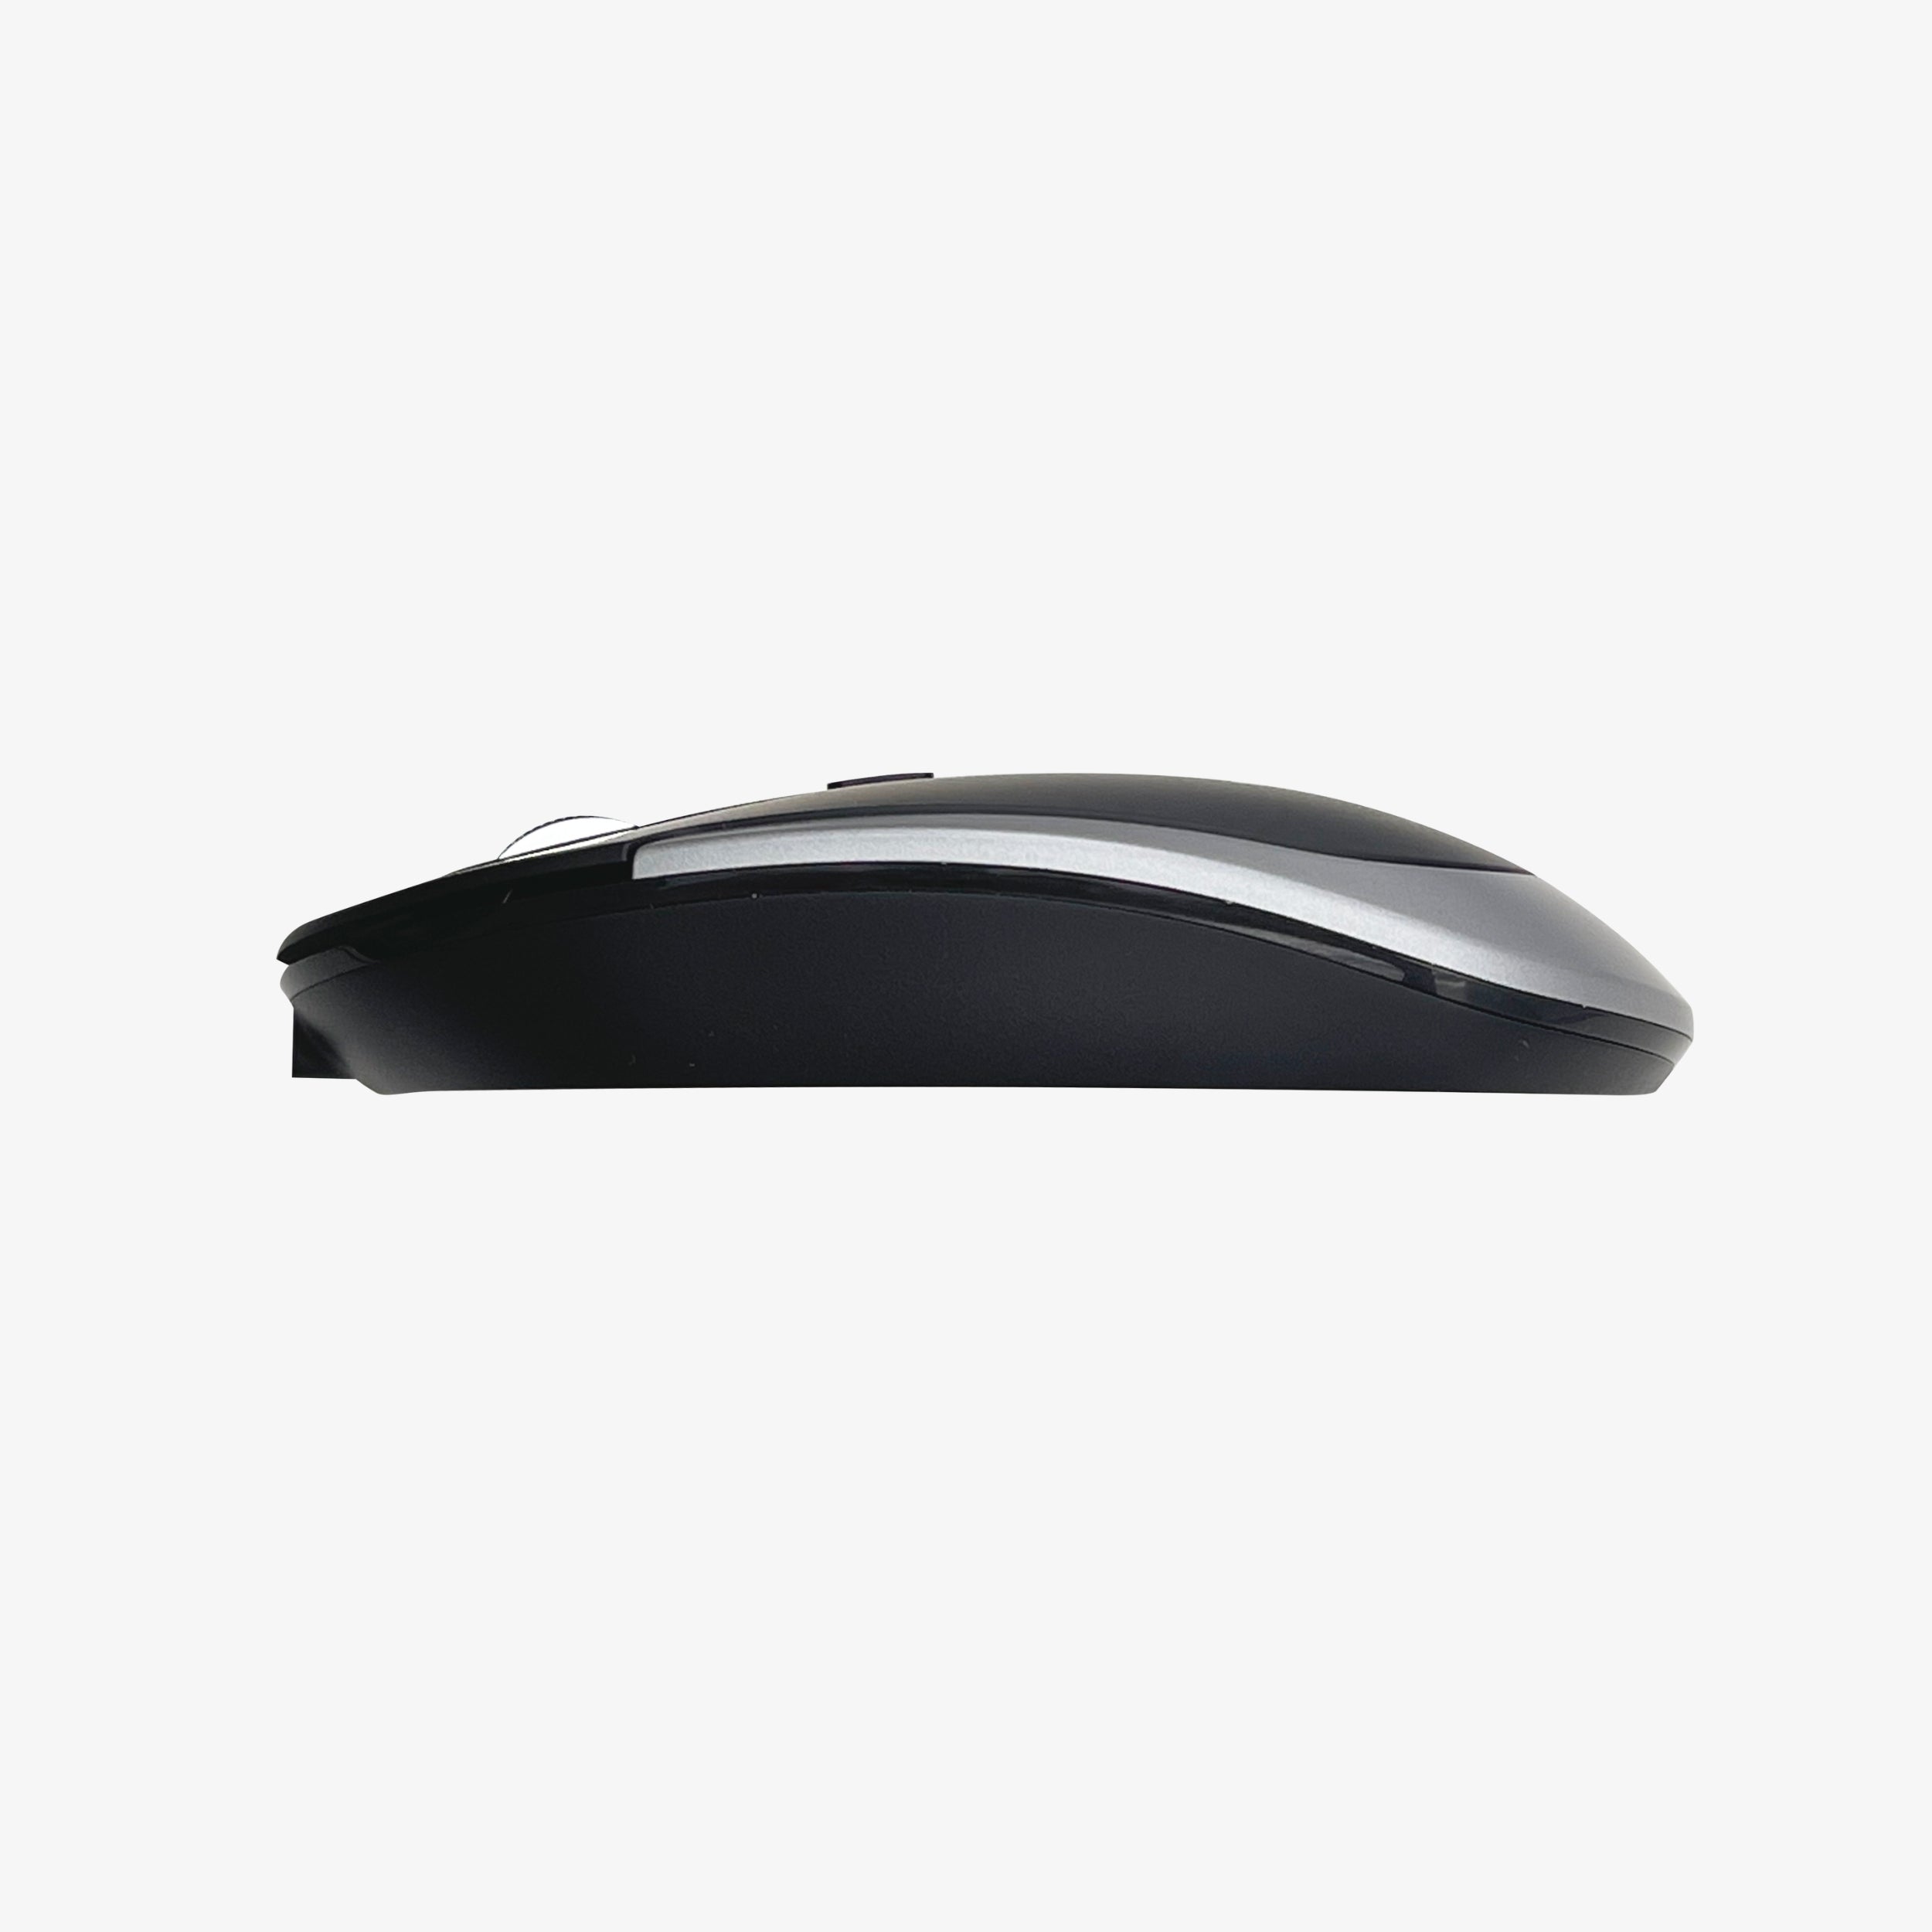 Keyboard and Mouse | Sleek Mac Duo